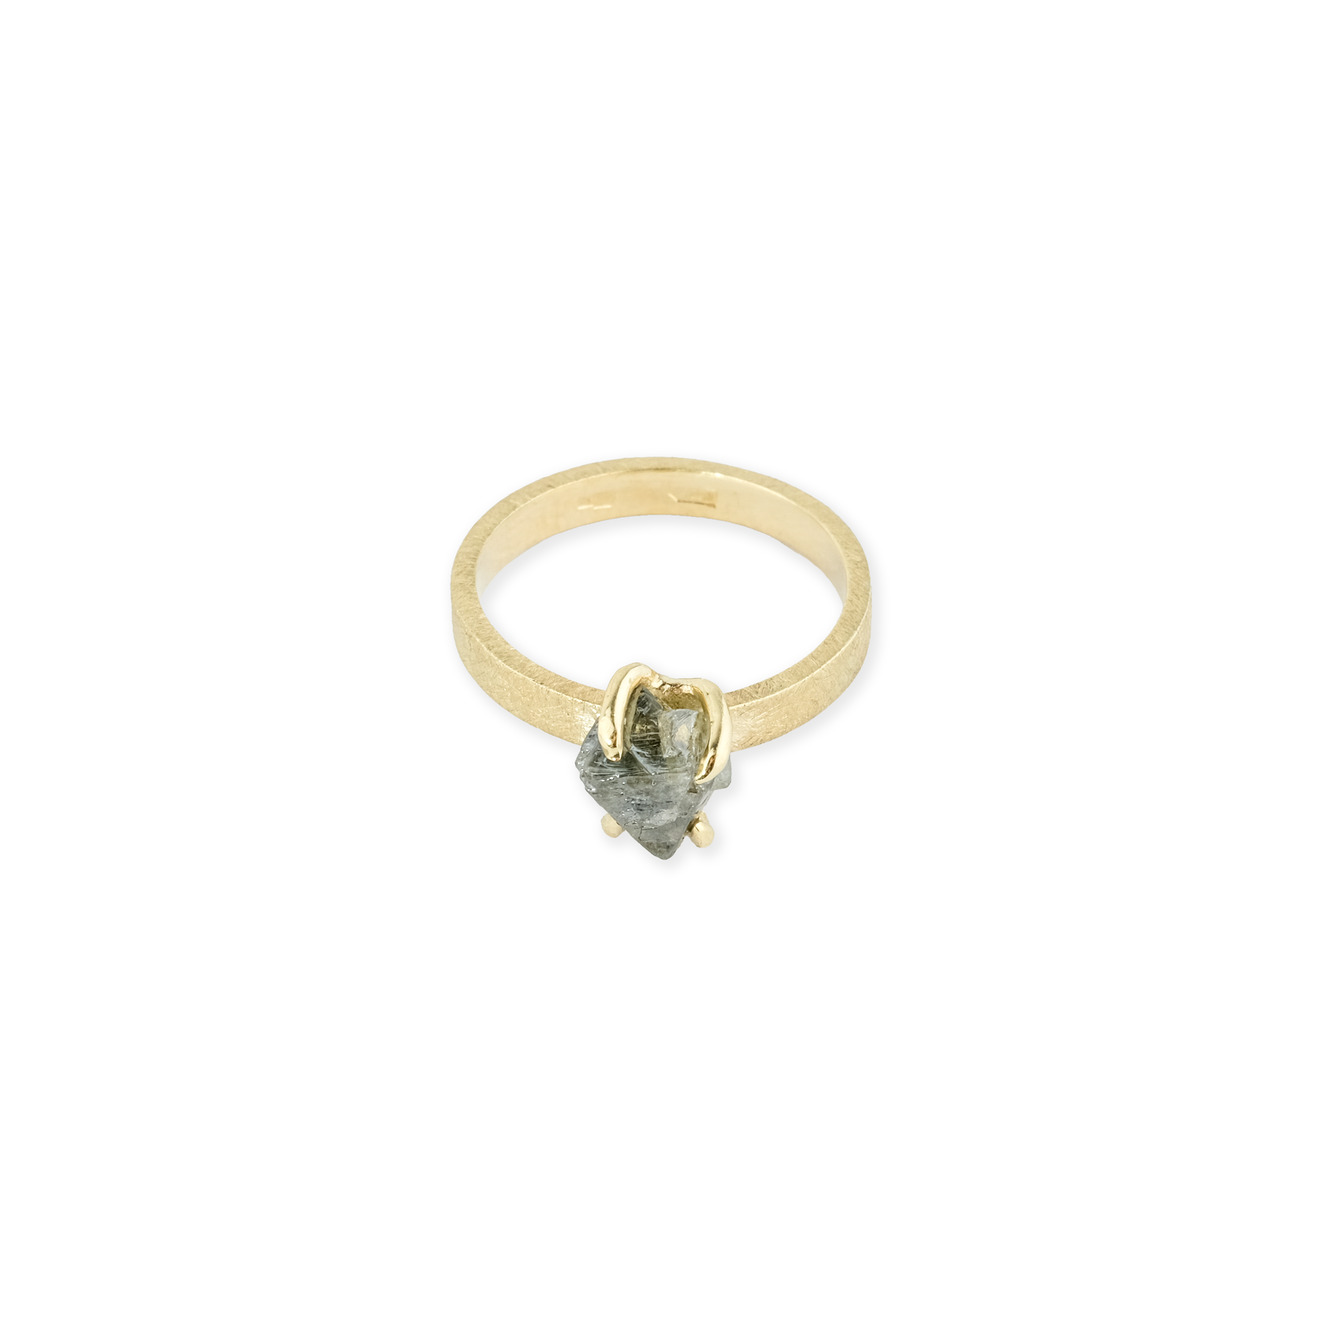 The EGO Кольцо Rough diamond из золота с кристаллом кварца